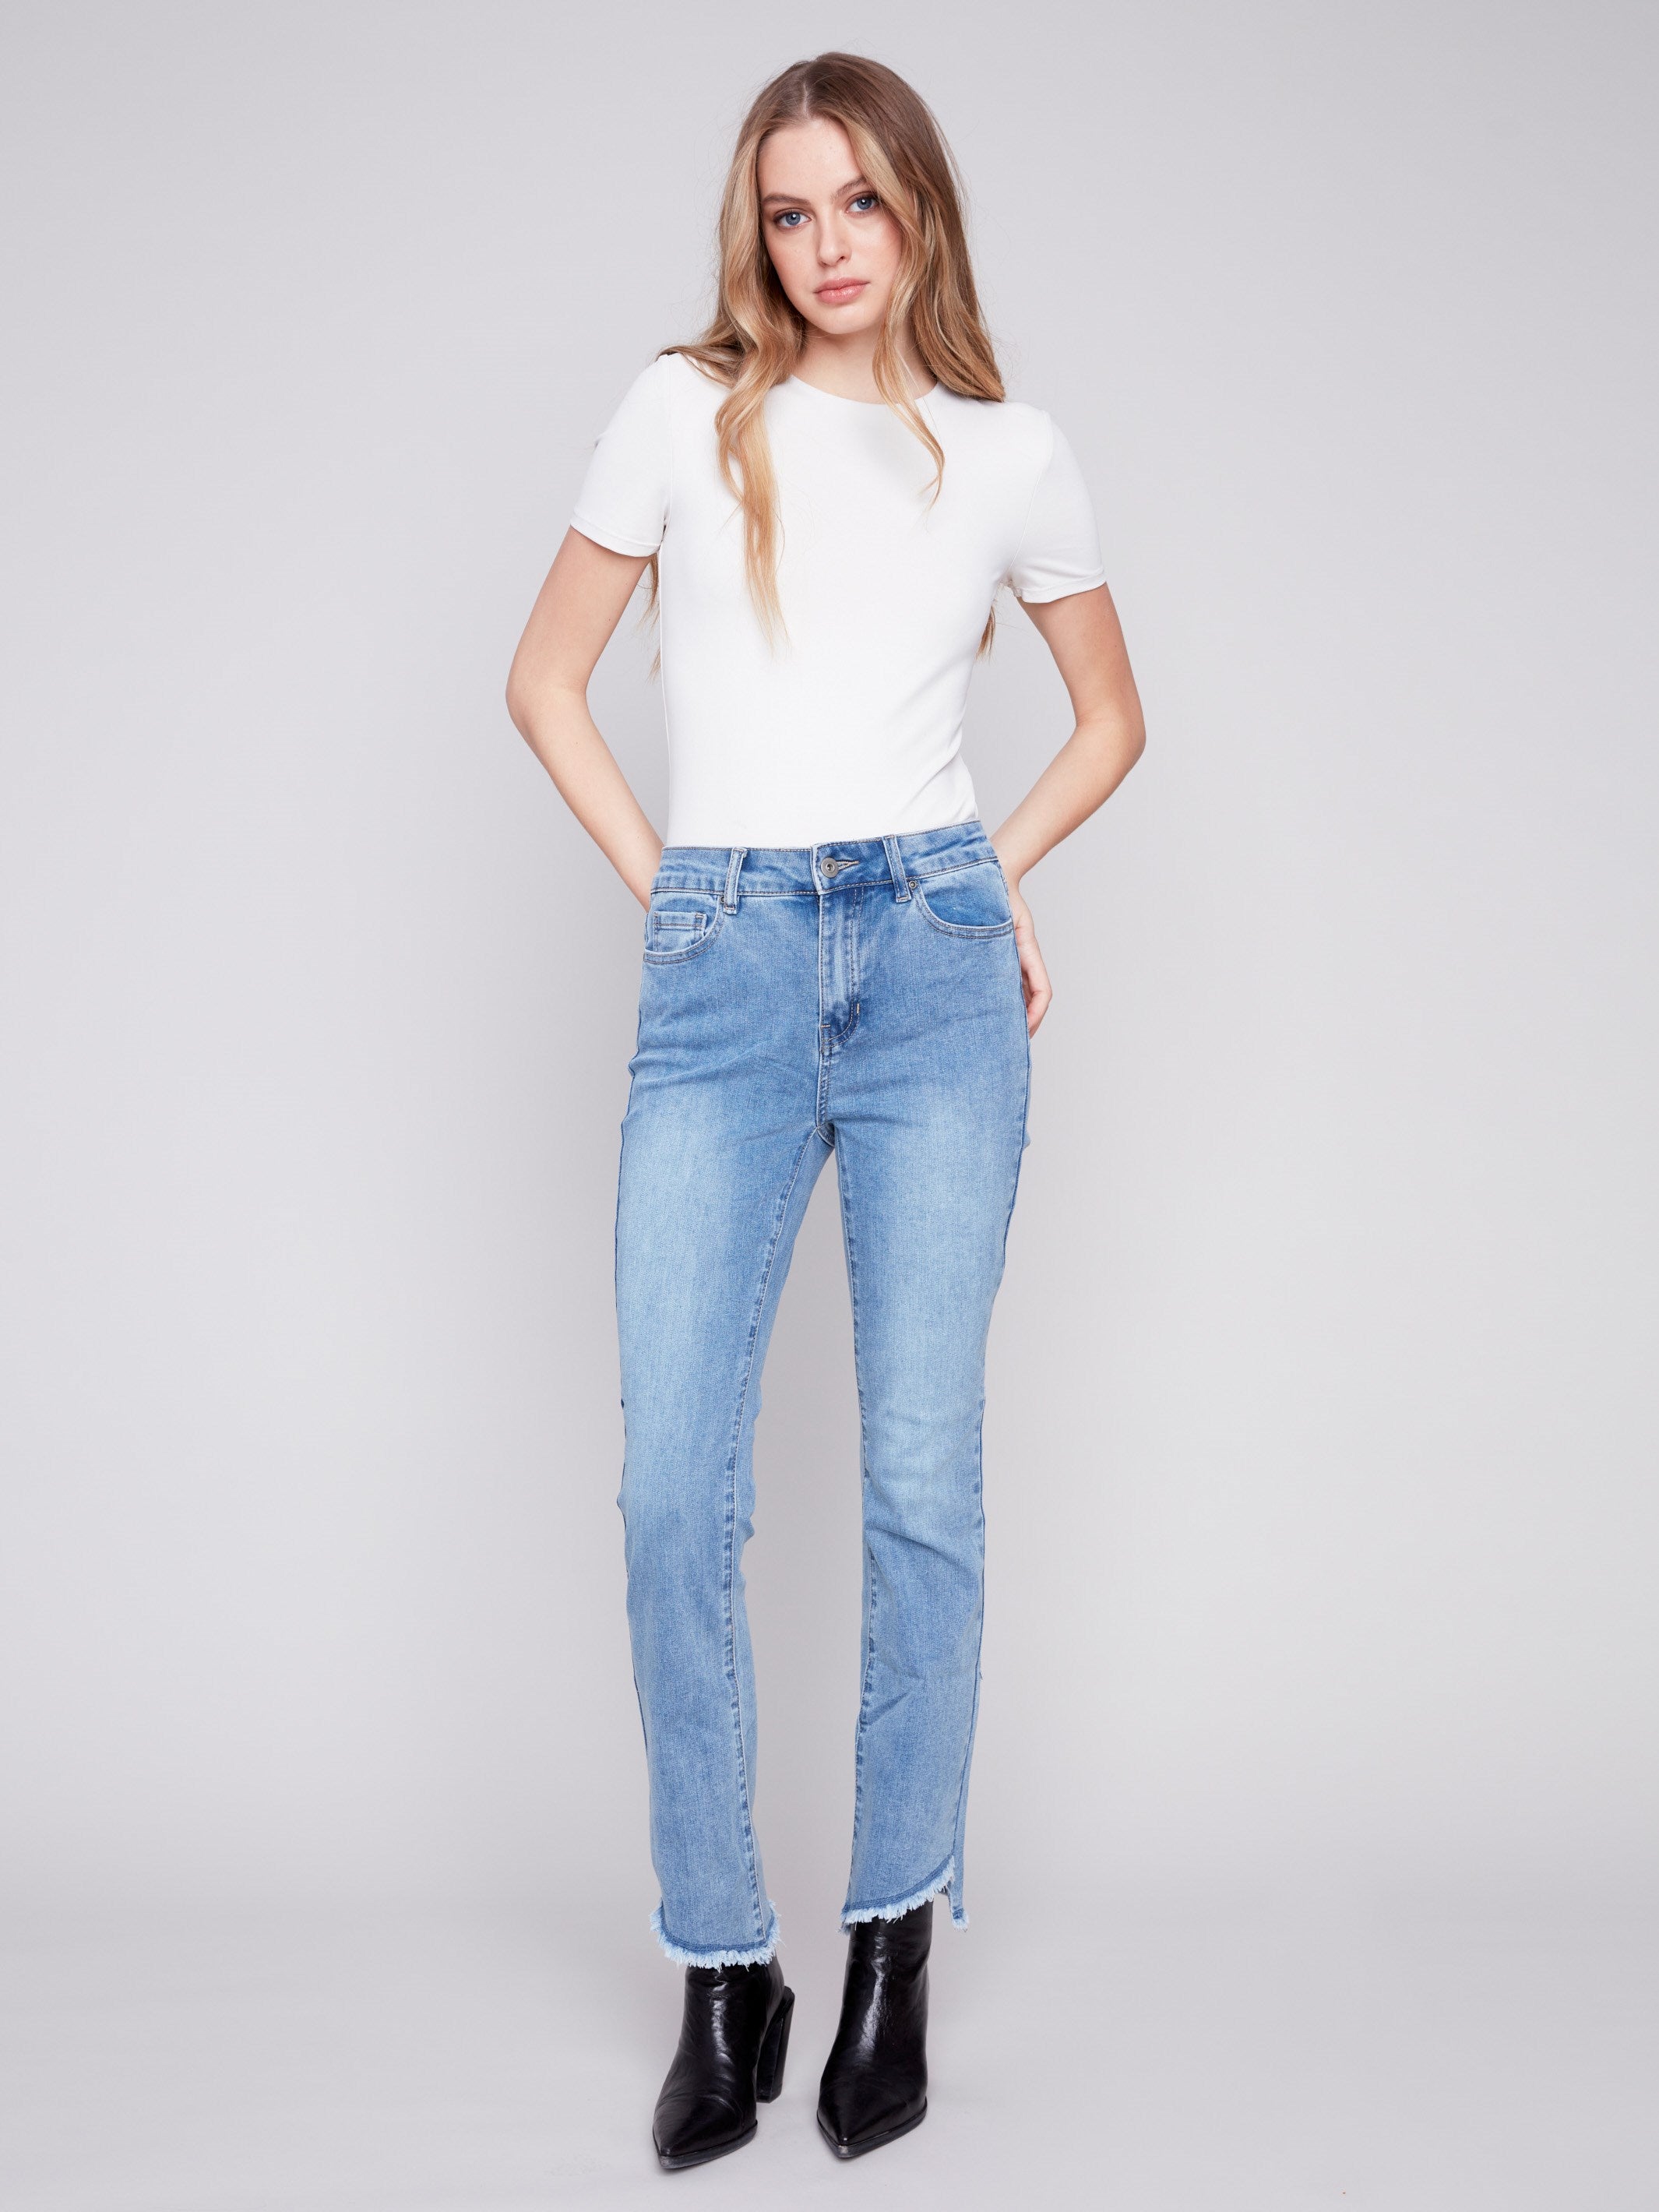 Charlie B Bootcut Jeans with Asymmetrical Hem - Light Blue - Image 1